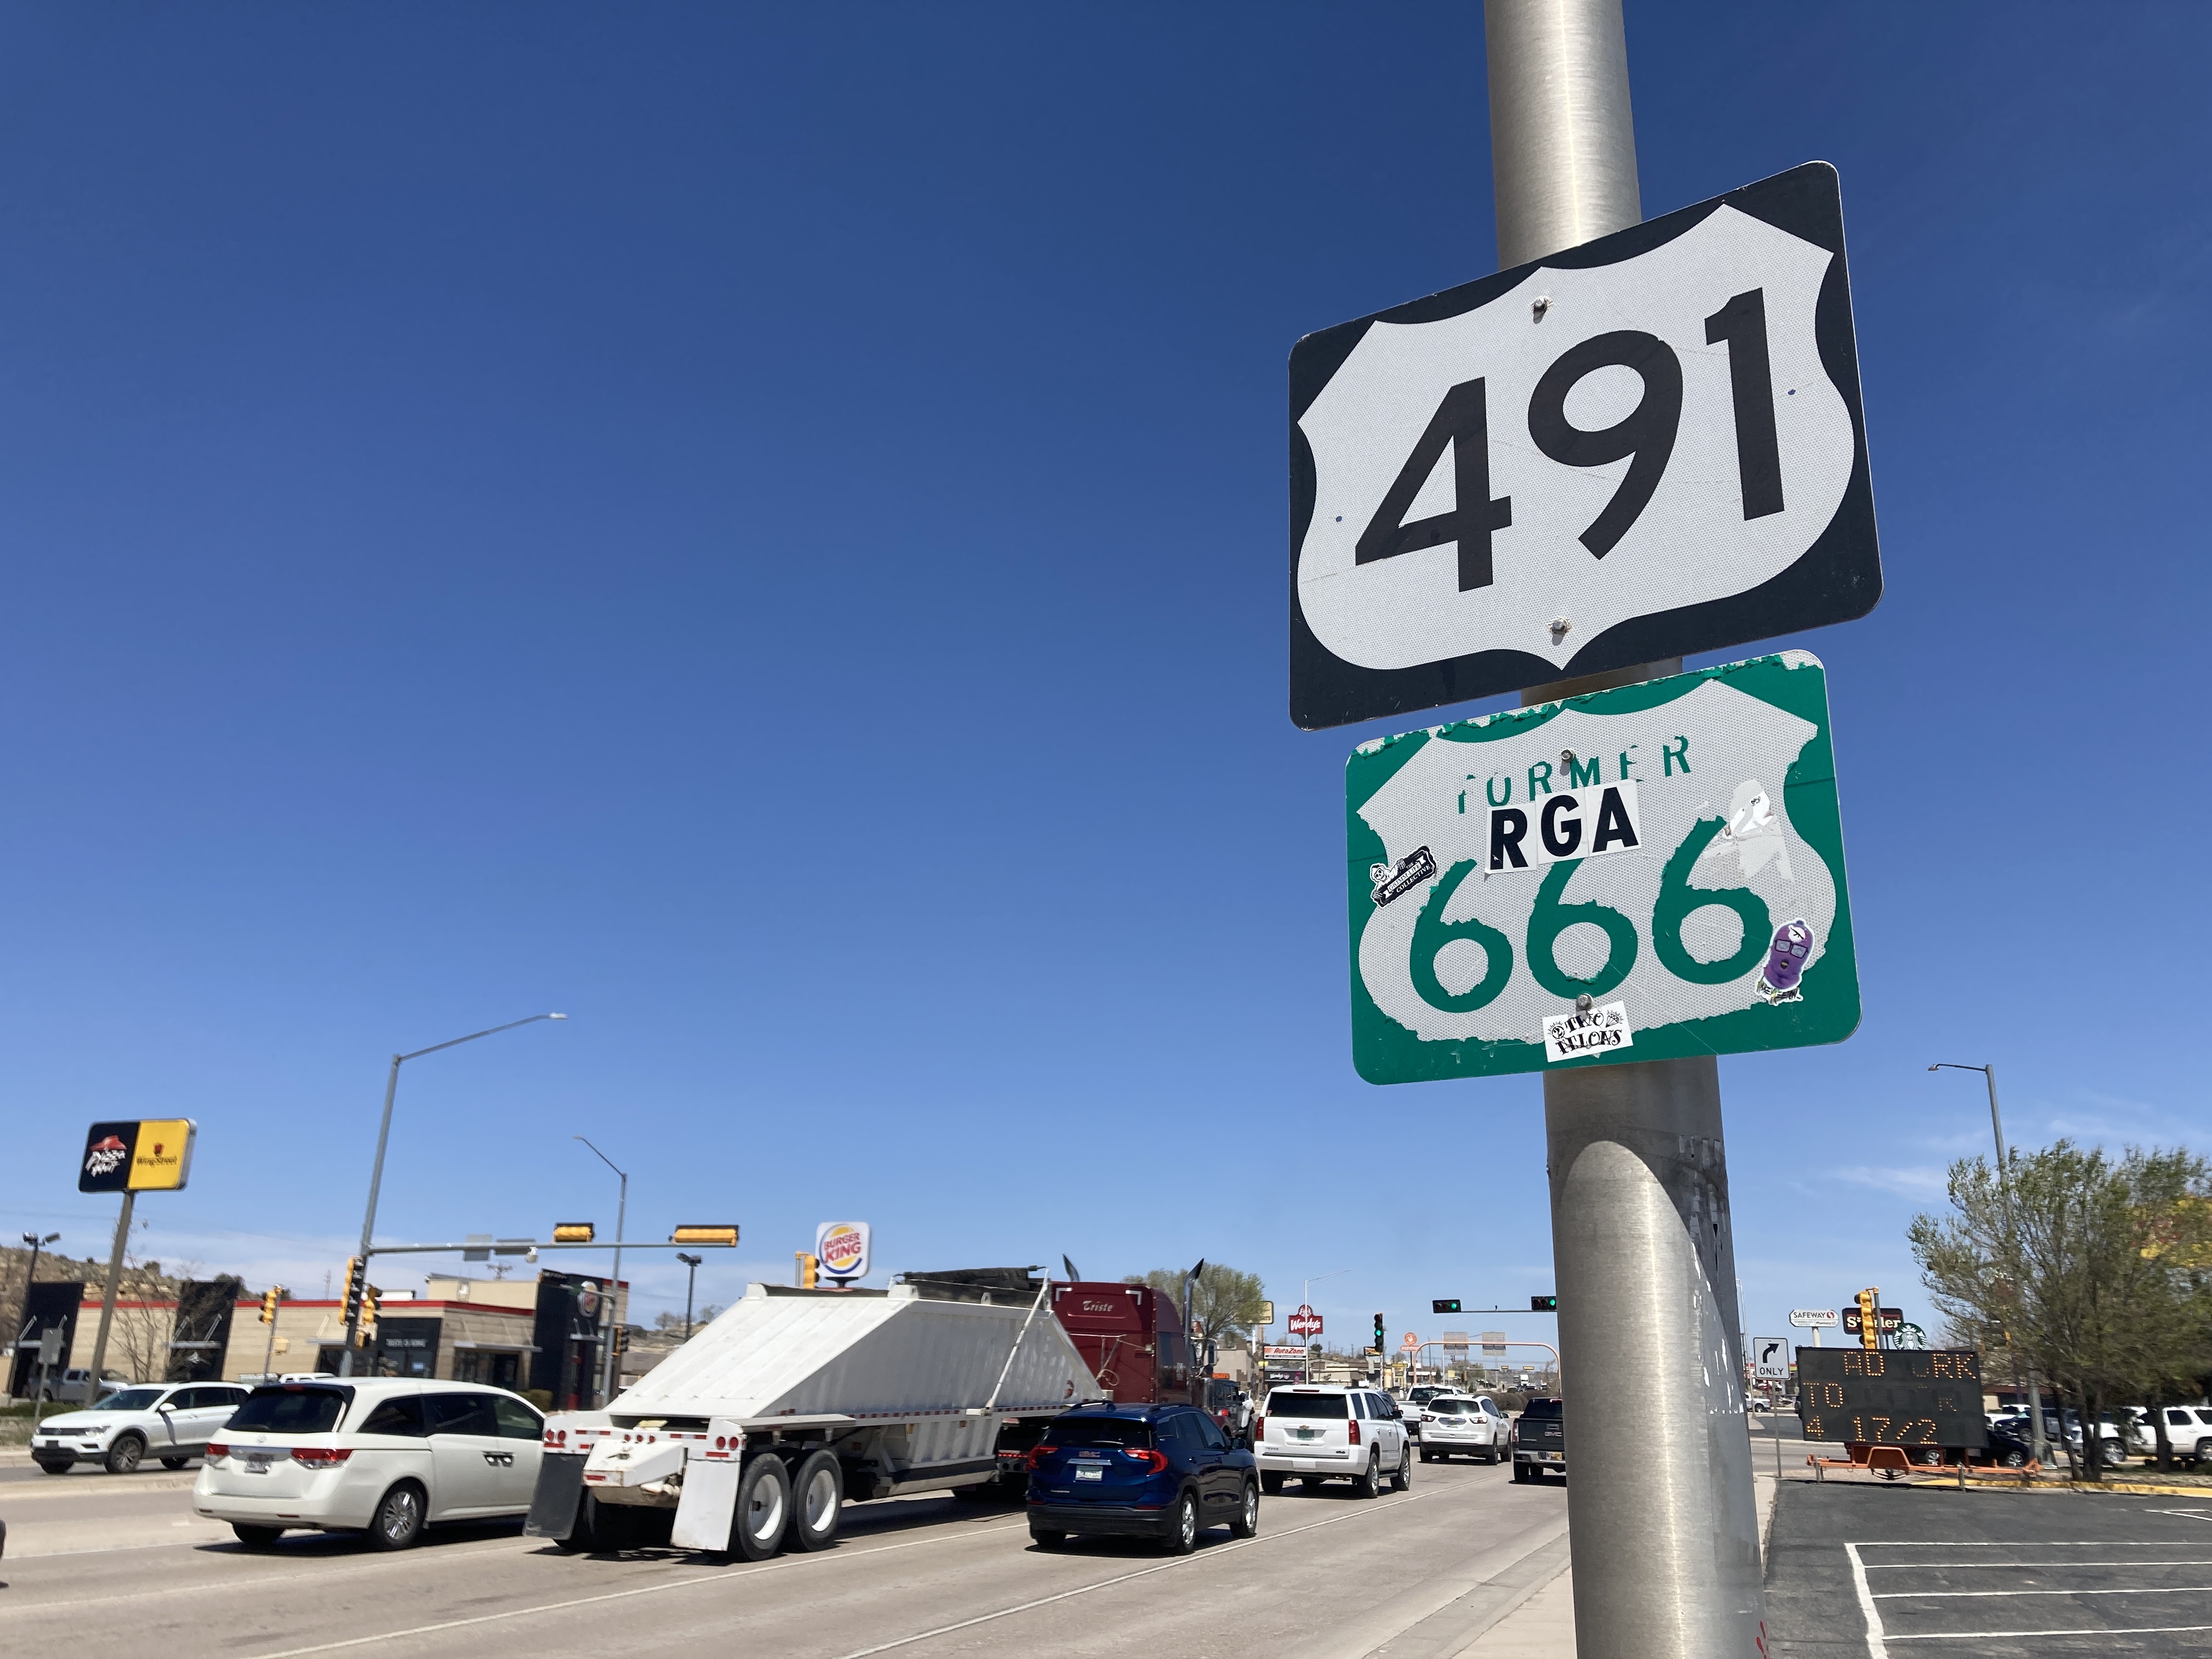 Sign of former U.S. Highway 666 below the current sign of Highway 491